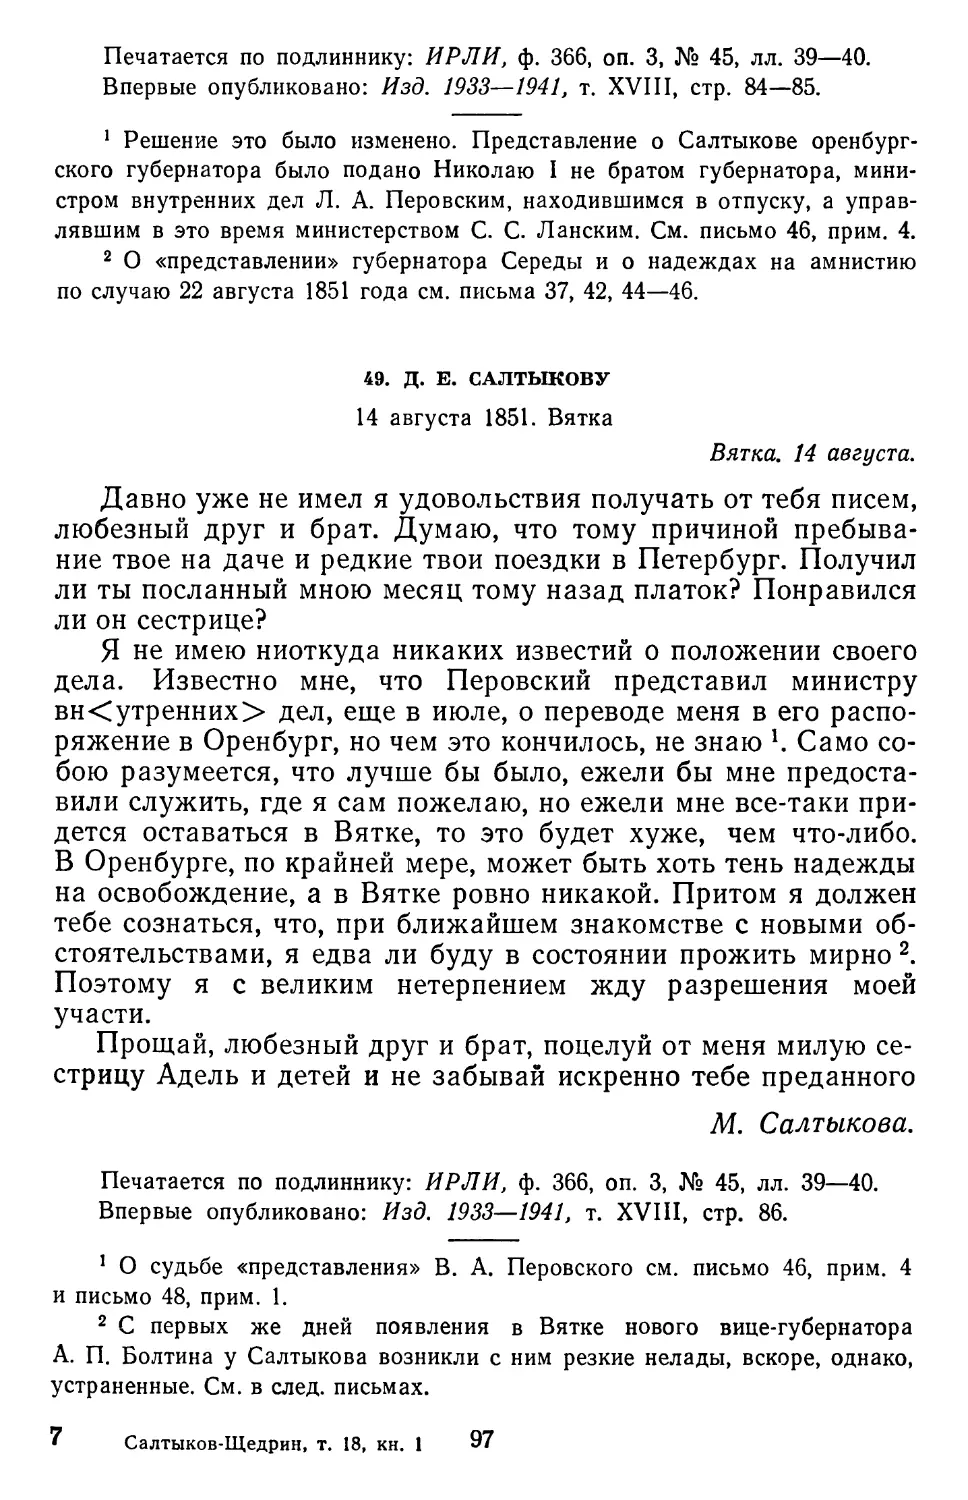 49.Д. Е. Салтыкову. 14 августа 1851.Вятка